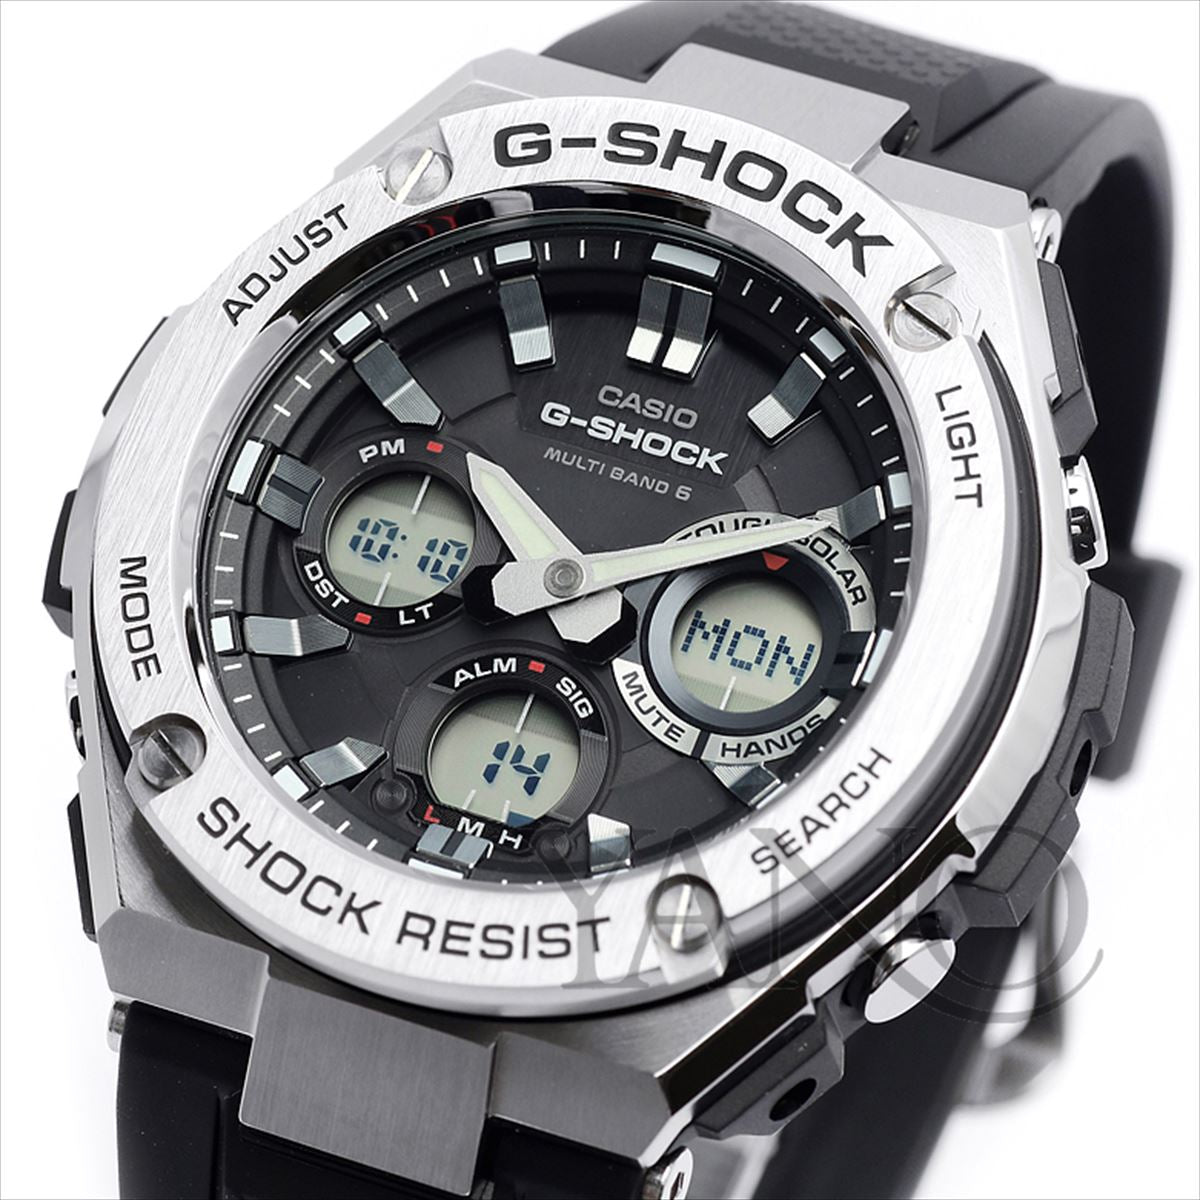 GST-W110-1AJF G-SHOCK時計